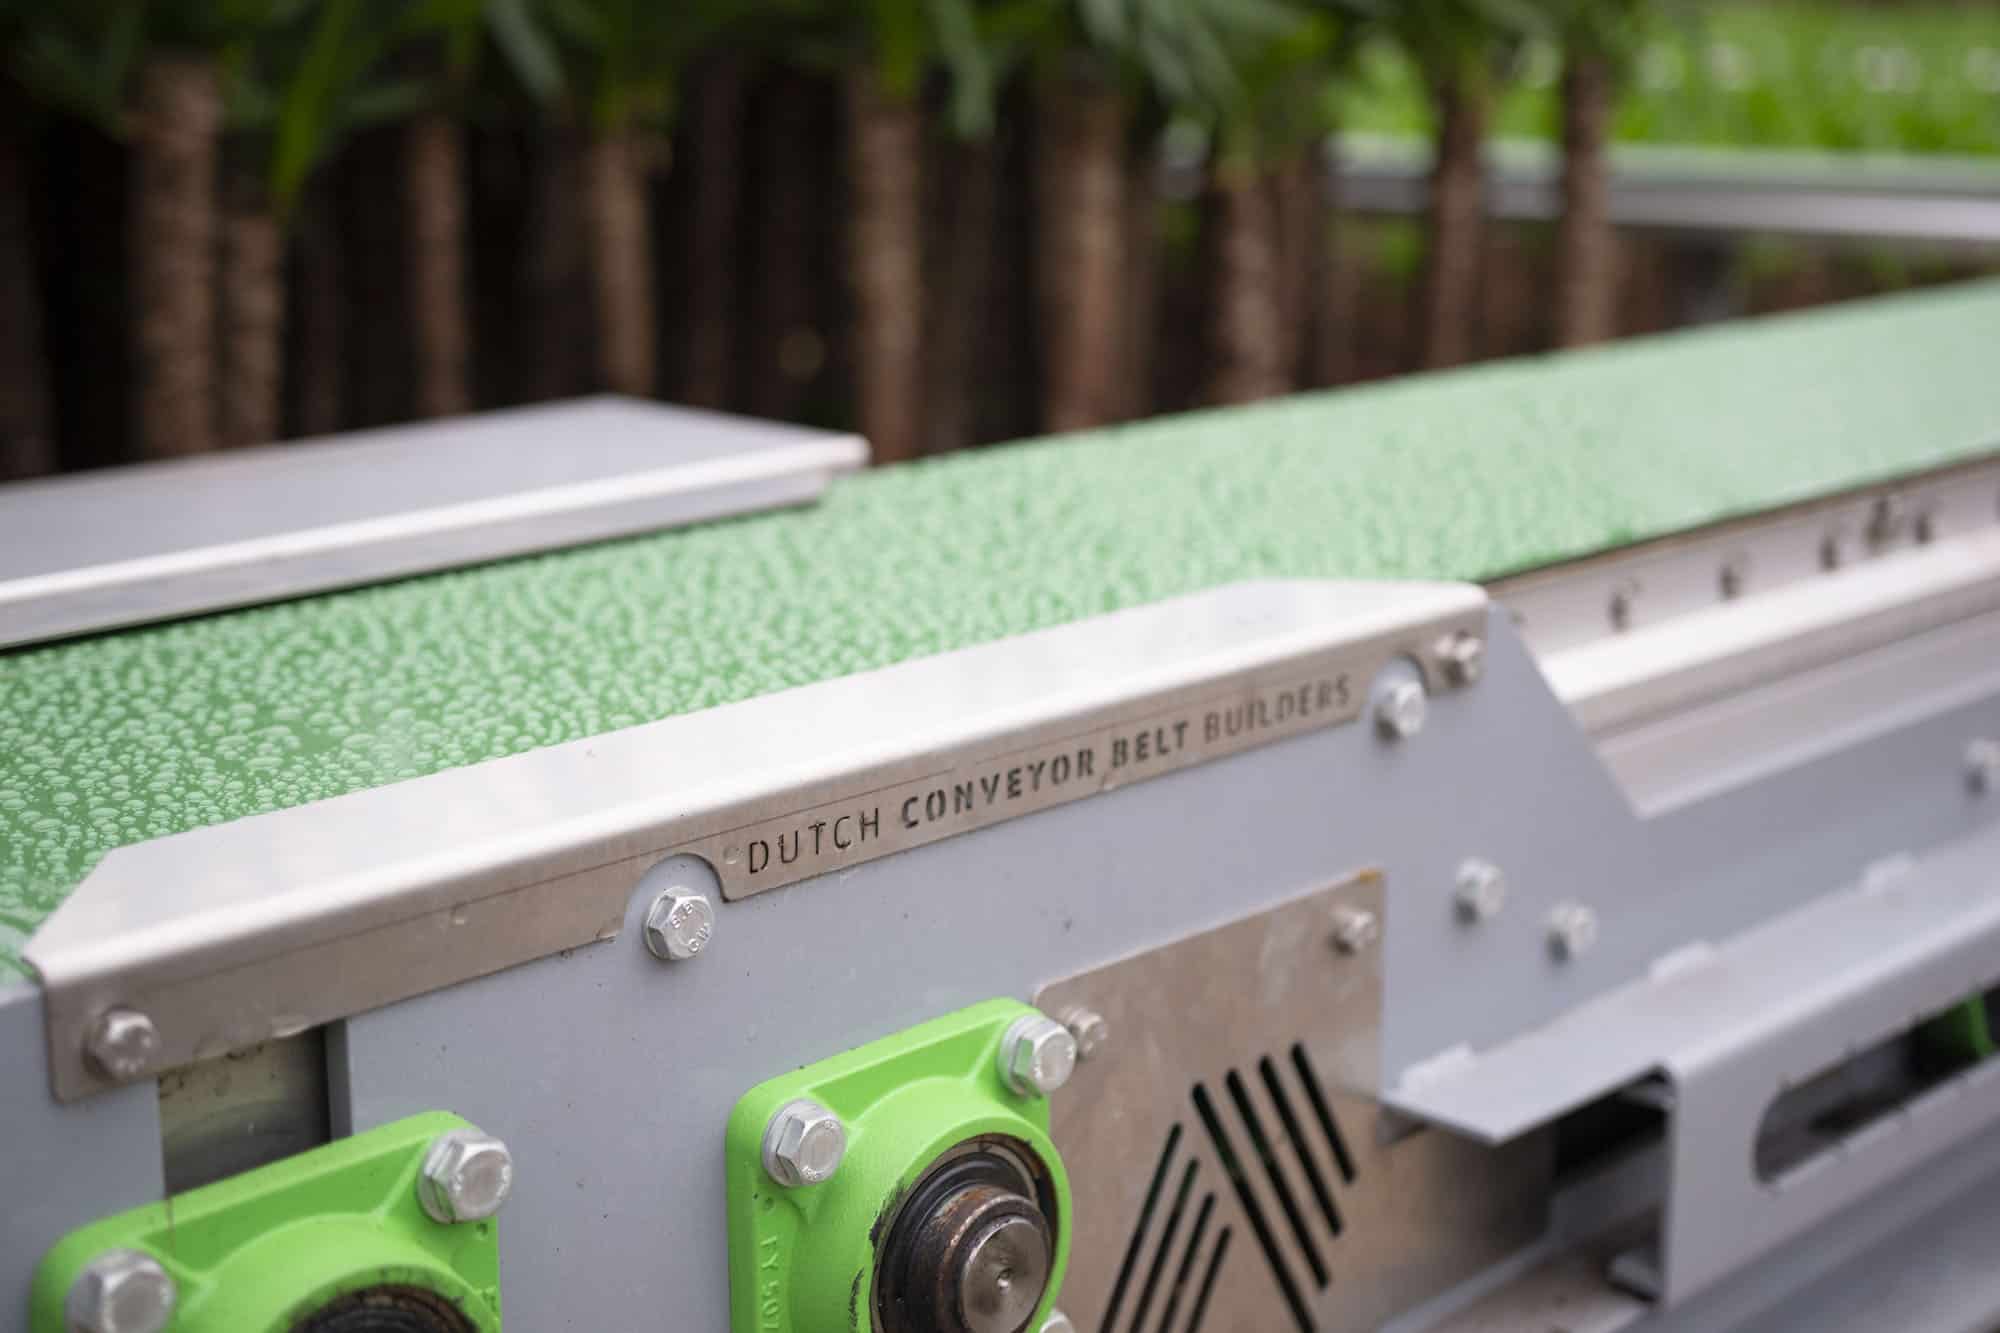 dutch conveyor belt builders show close up on a plant delivery mechanism